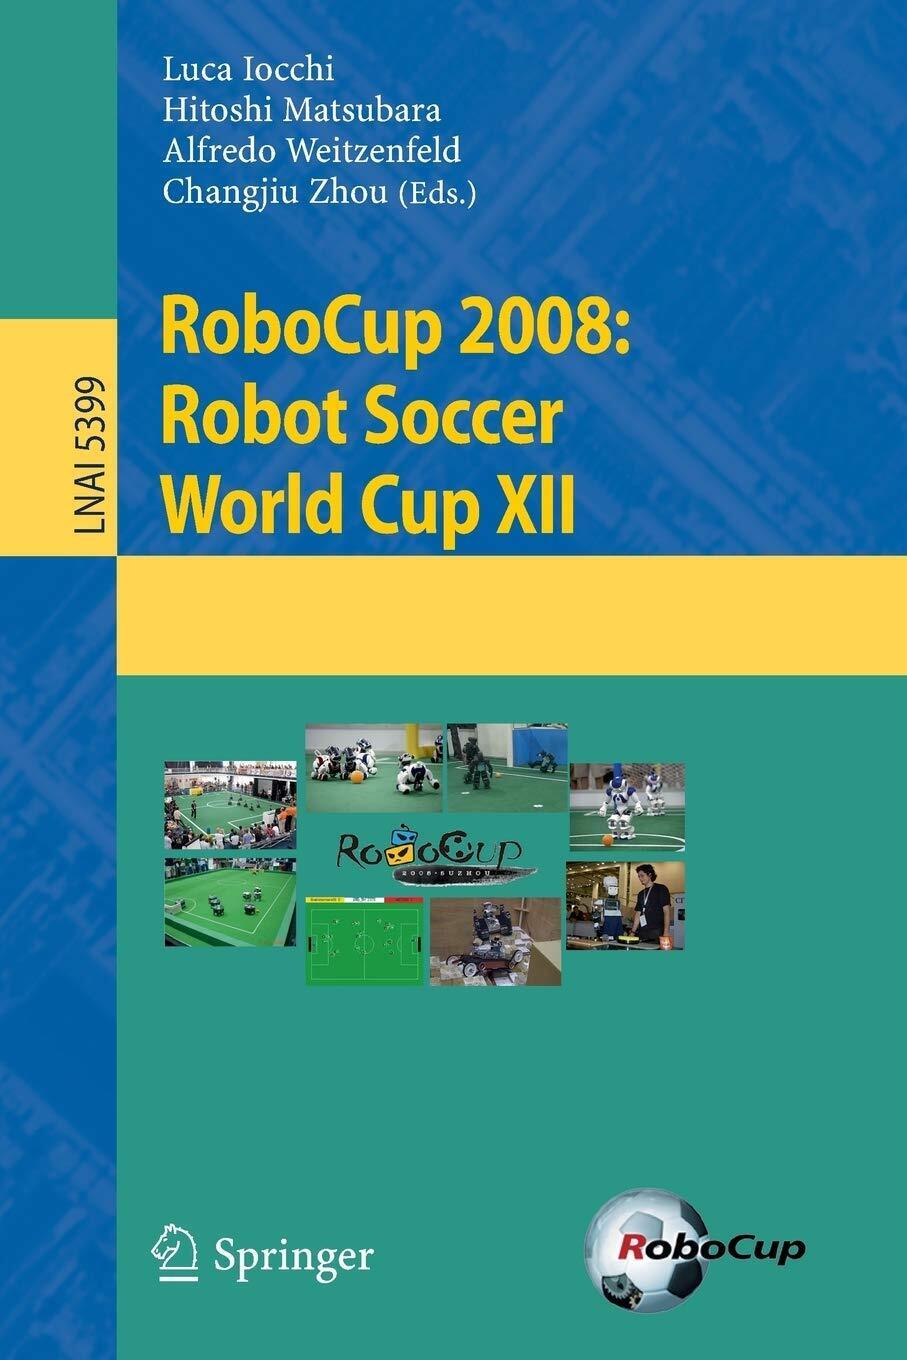 RoboCup 2008: Robot Soccer World Cup XII - Luca Iocchi - Springer, 2010